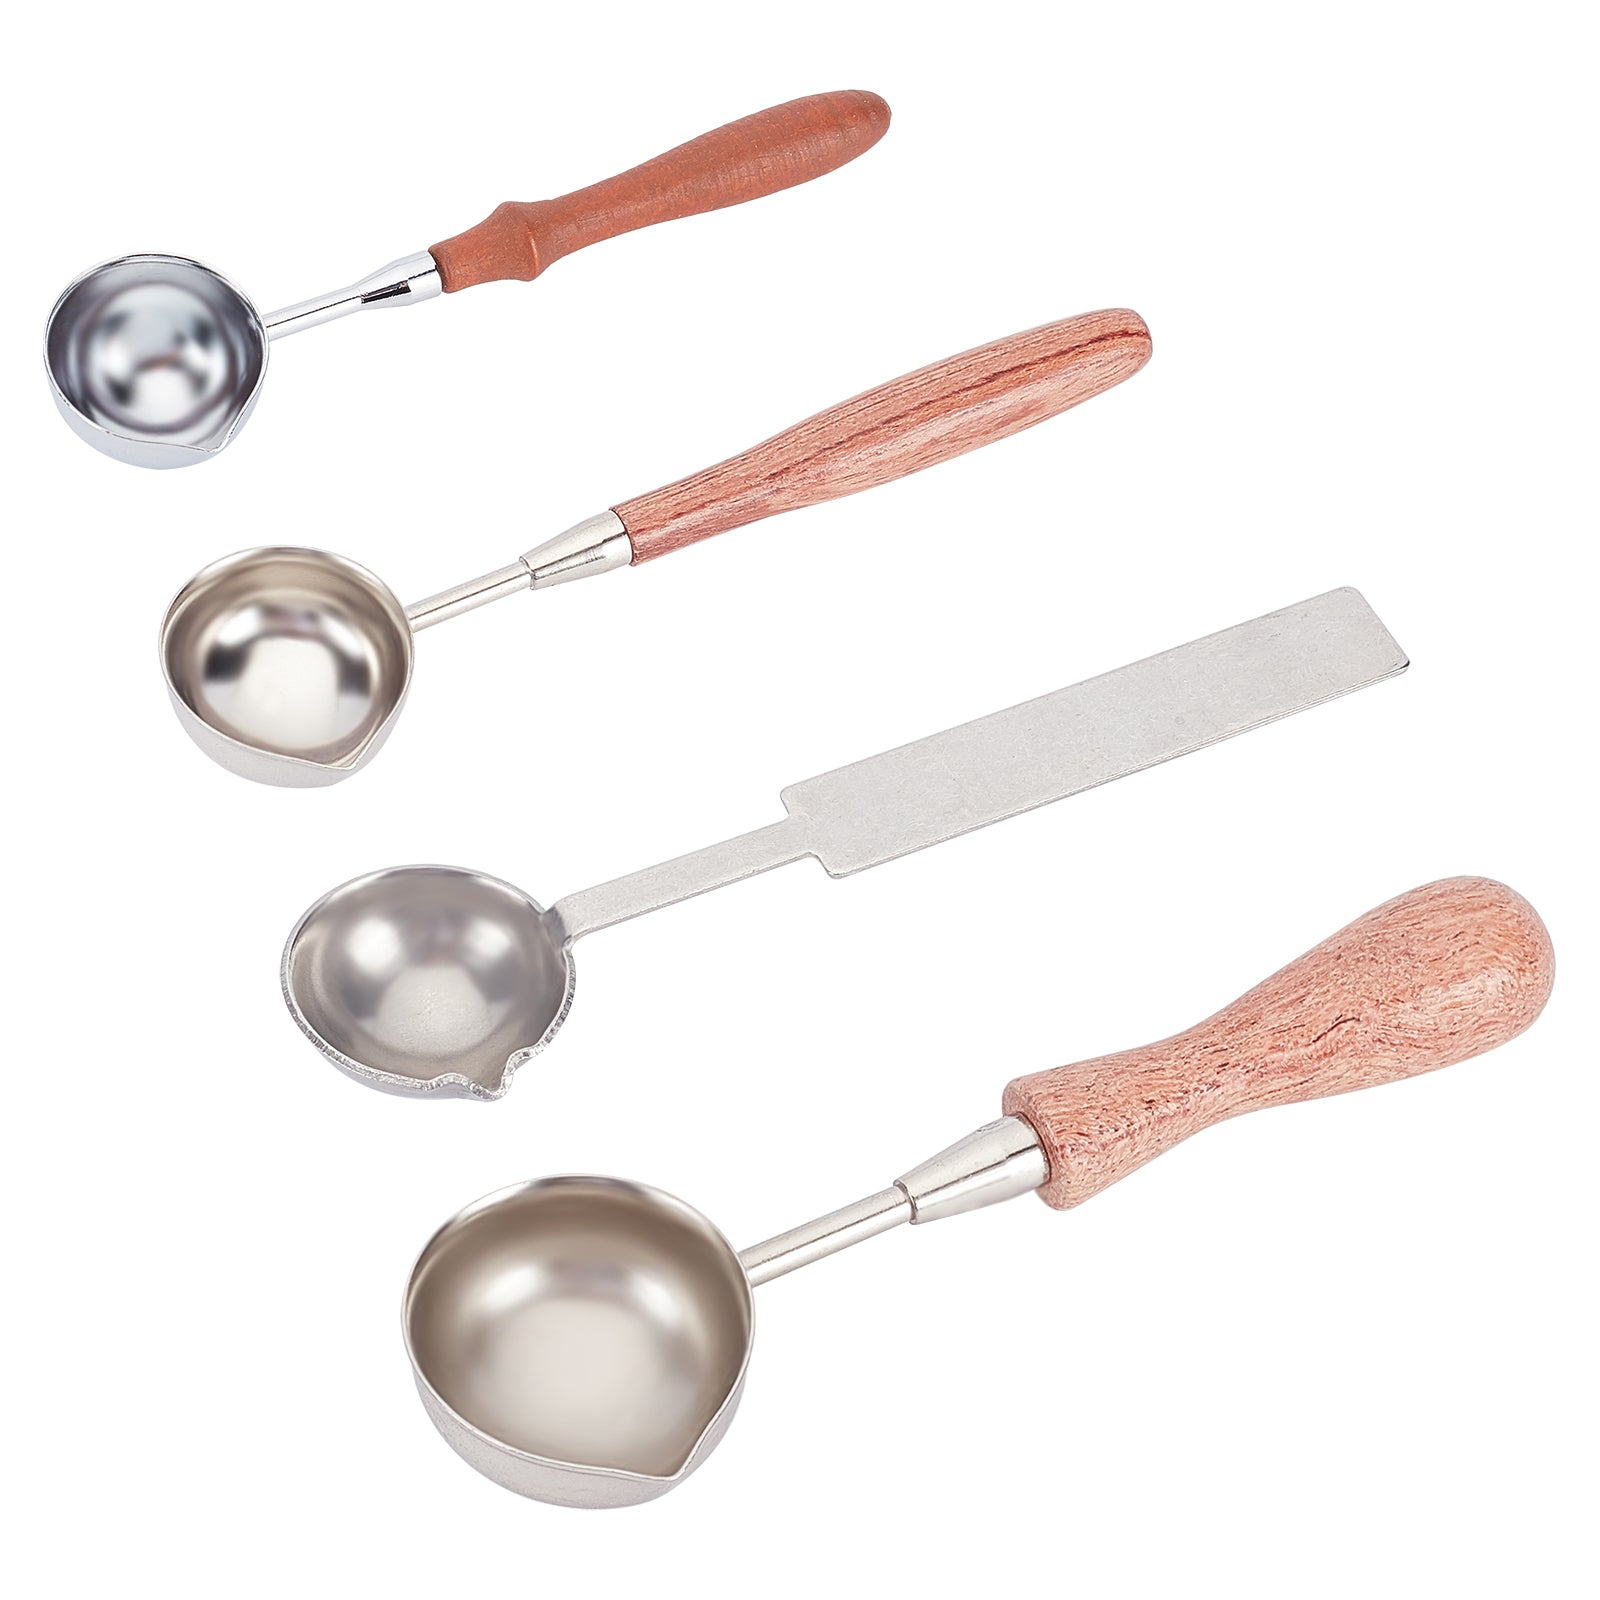 4pcs Sealing Wax Spoon